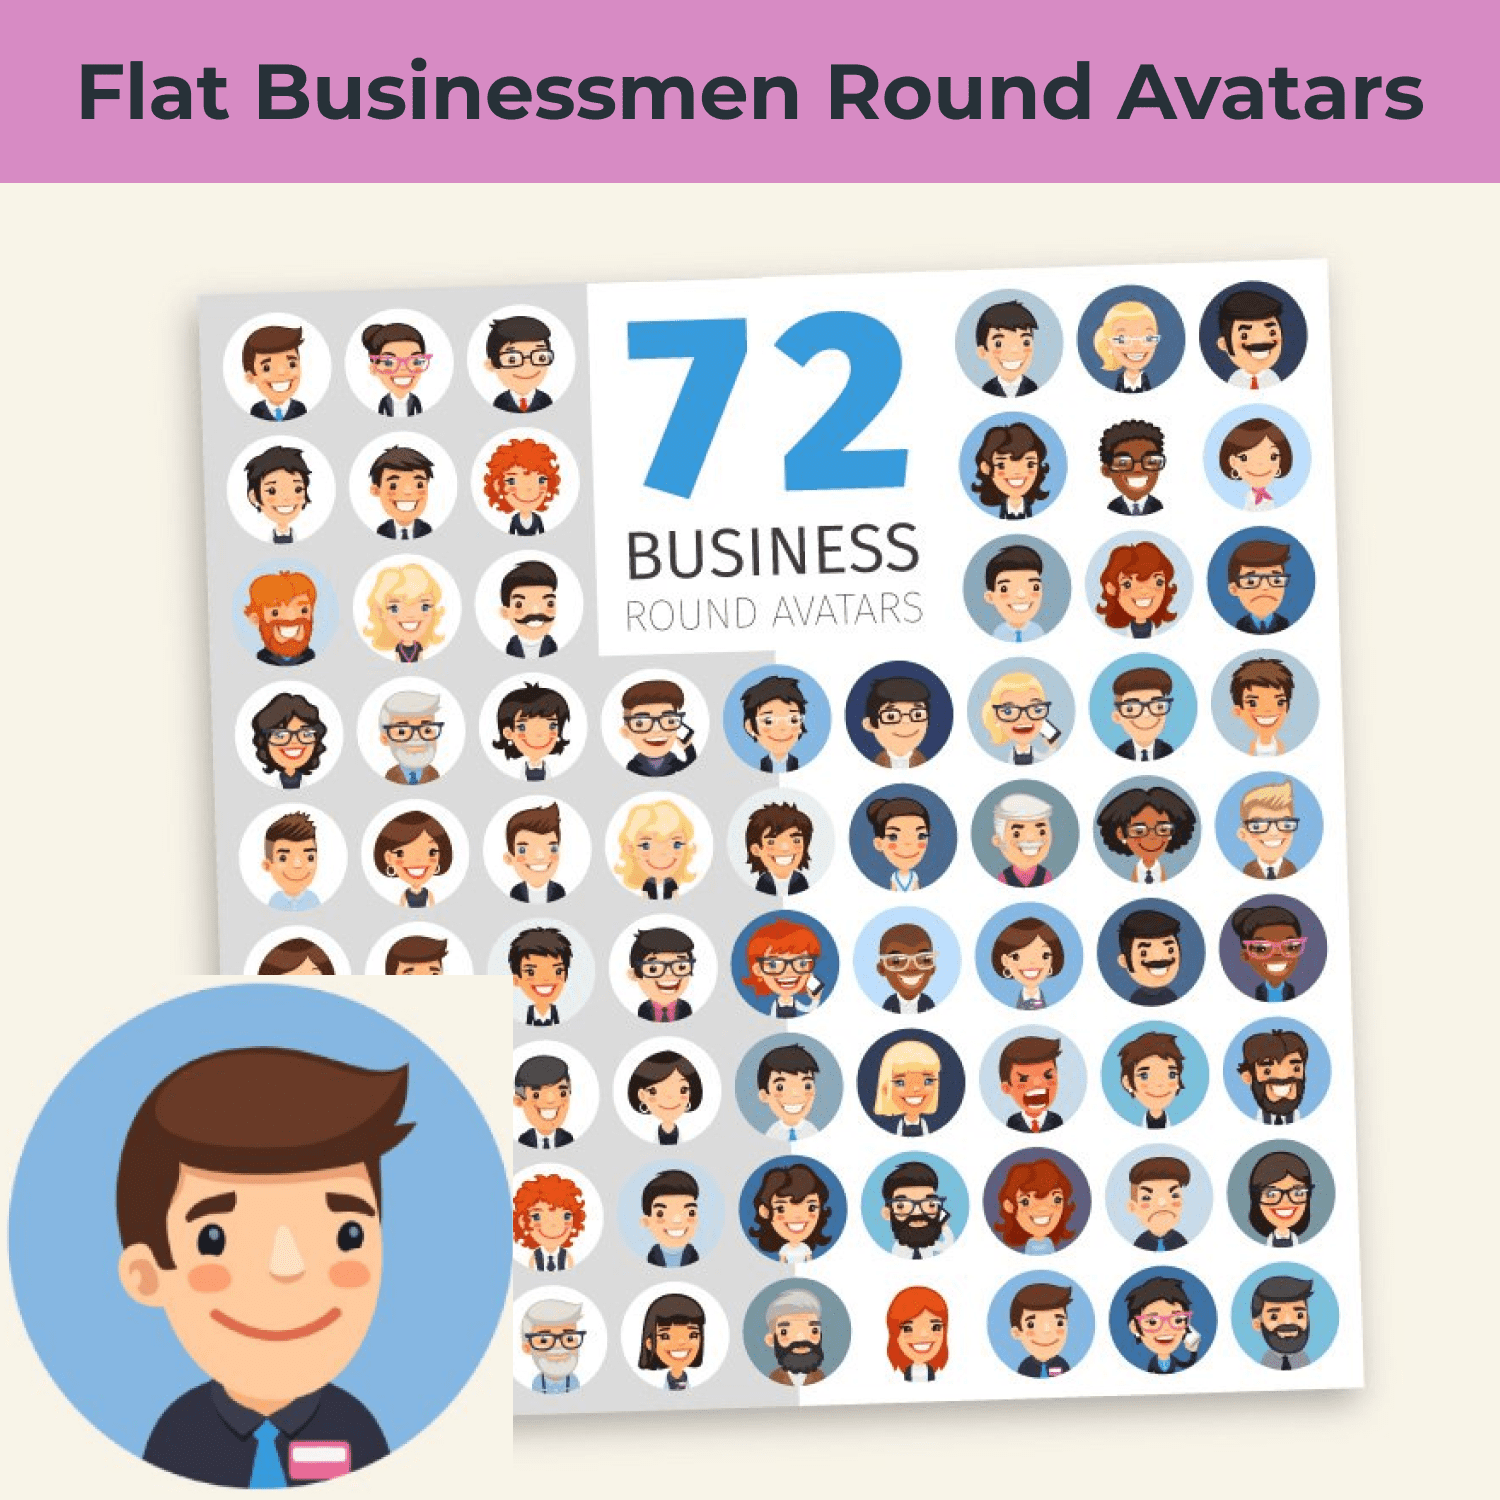 Flat Businessmen Round Avatars cover image.